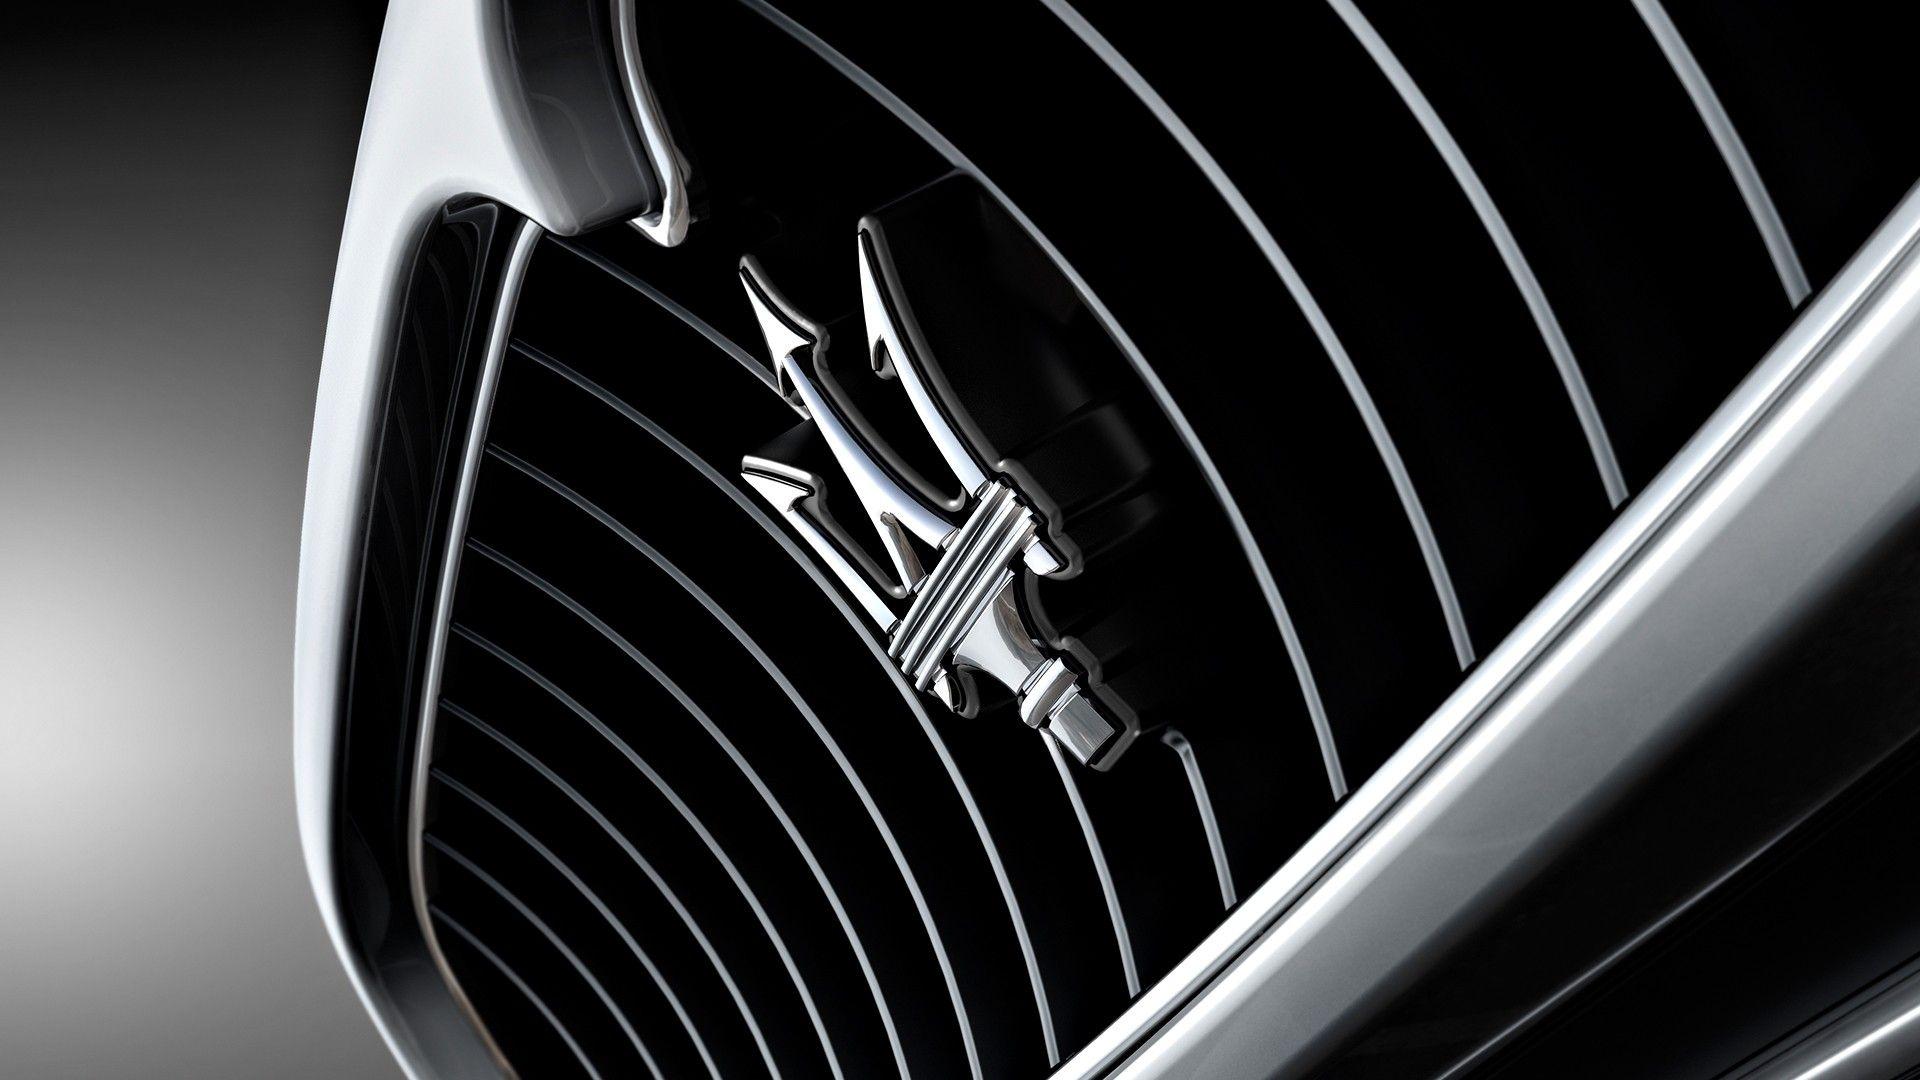 Black and White Sport Car Logo - Maserati Logo, Maserati Car Symbol Meaning and History. Car Brand